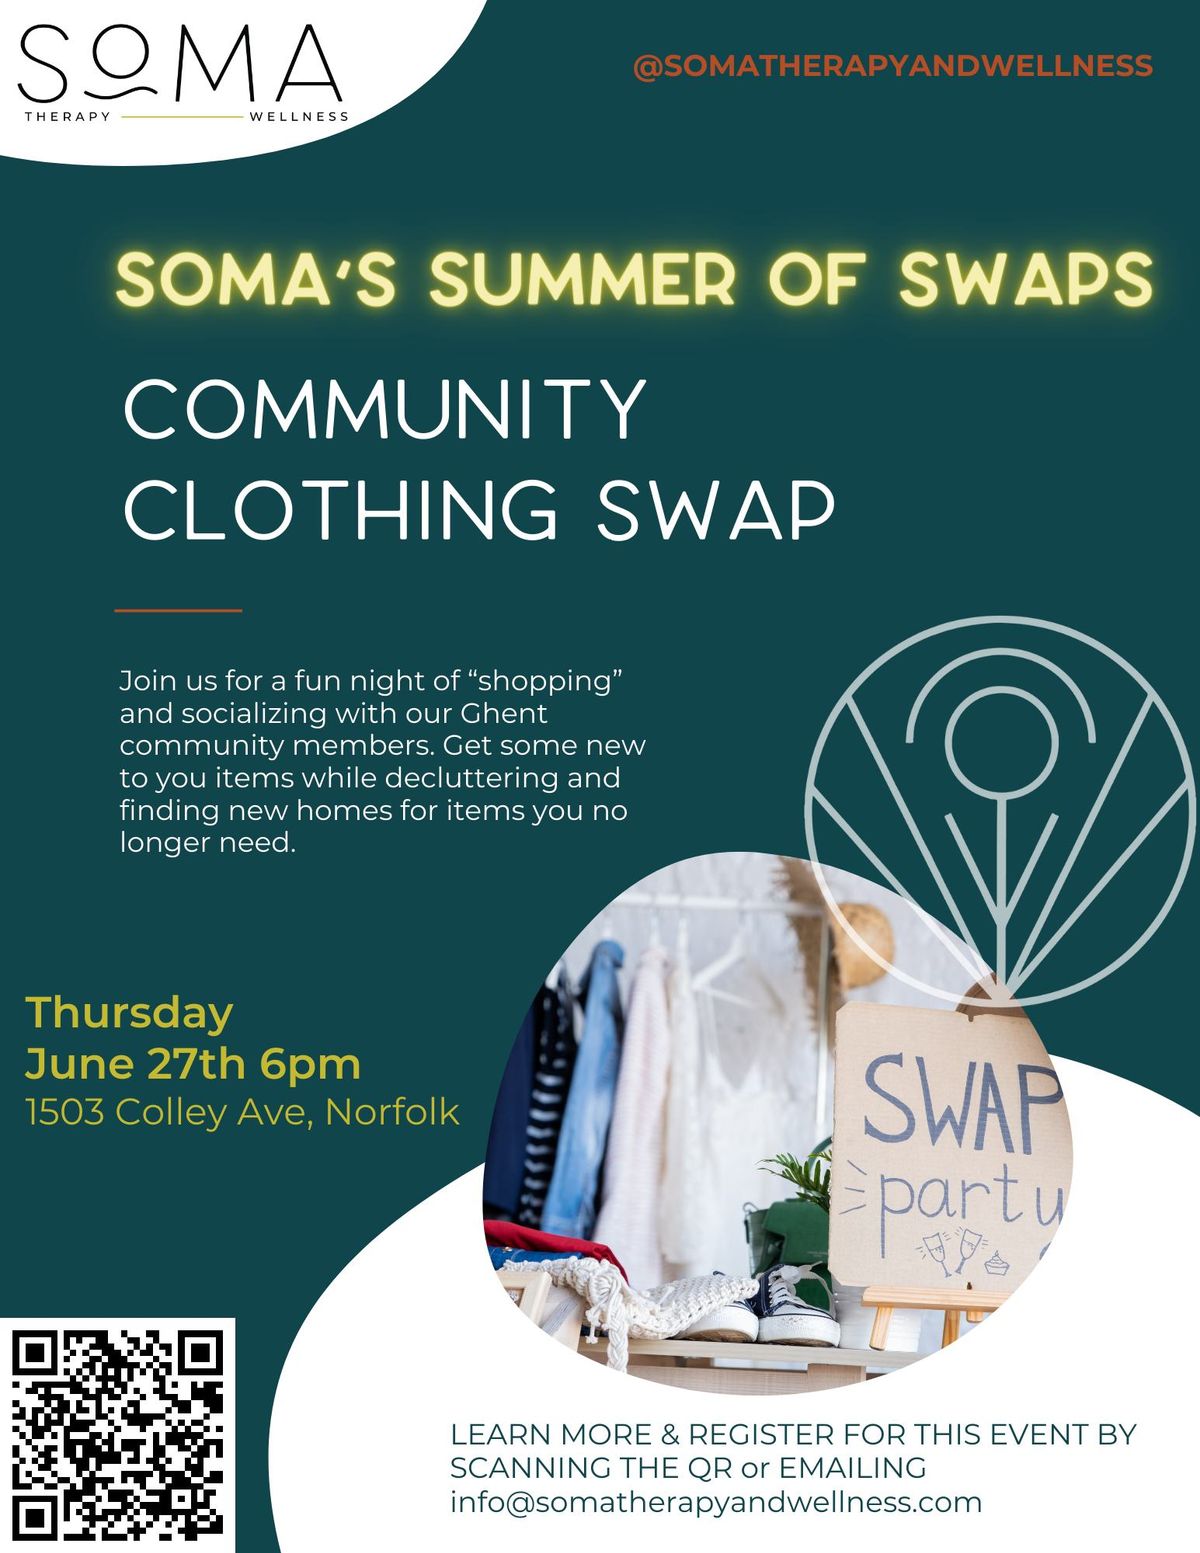 SOMA's Community Clothing Swap 